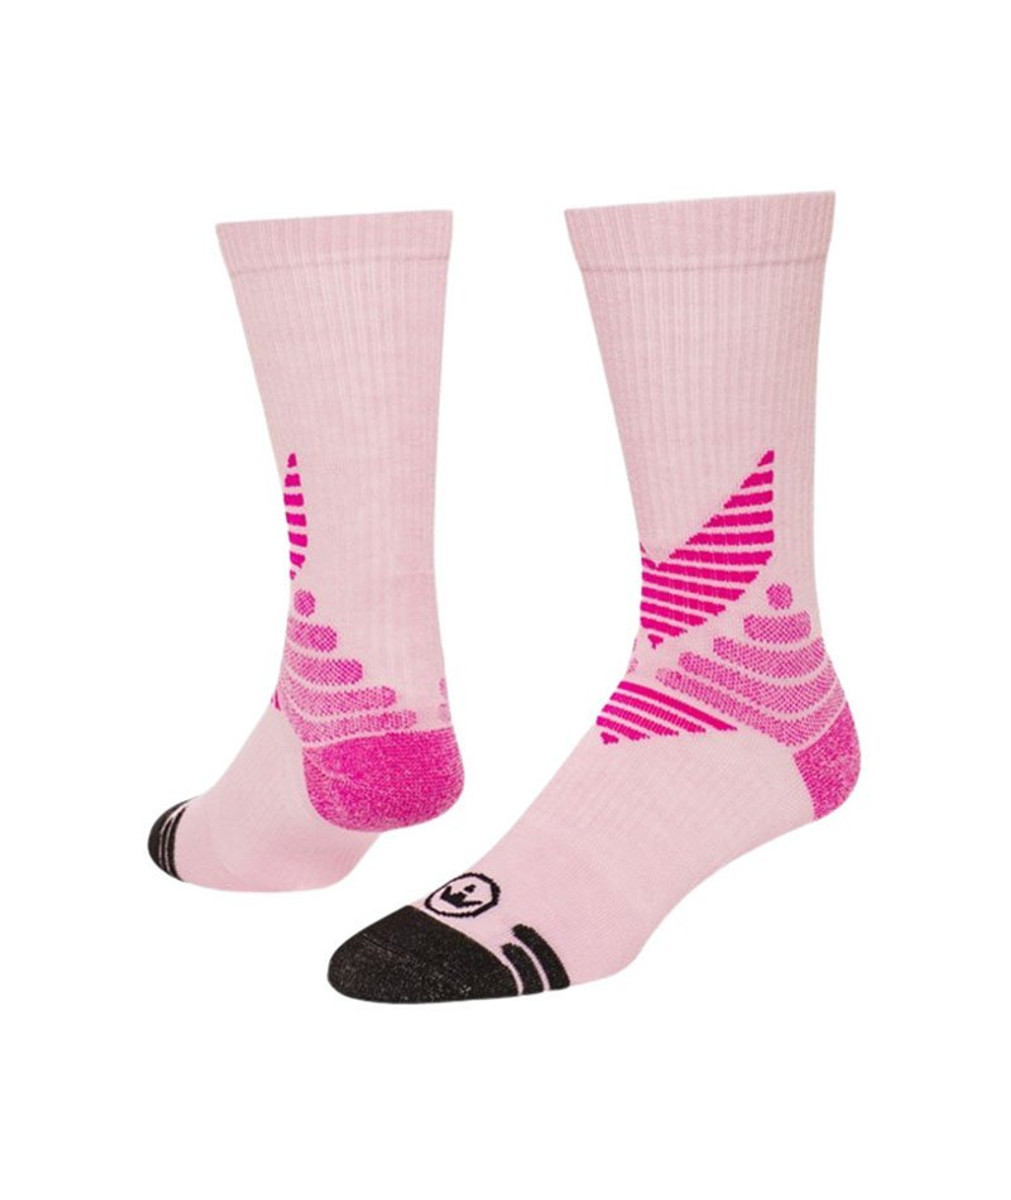 All Sport Crew Performance Sports Socks - Light Pink Hot Pink